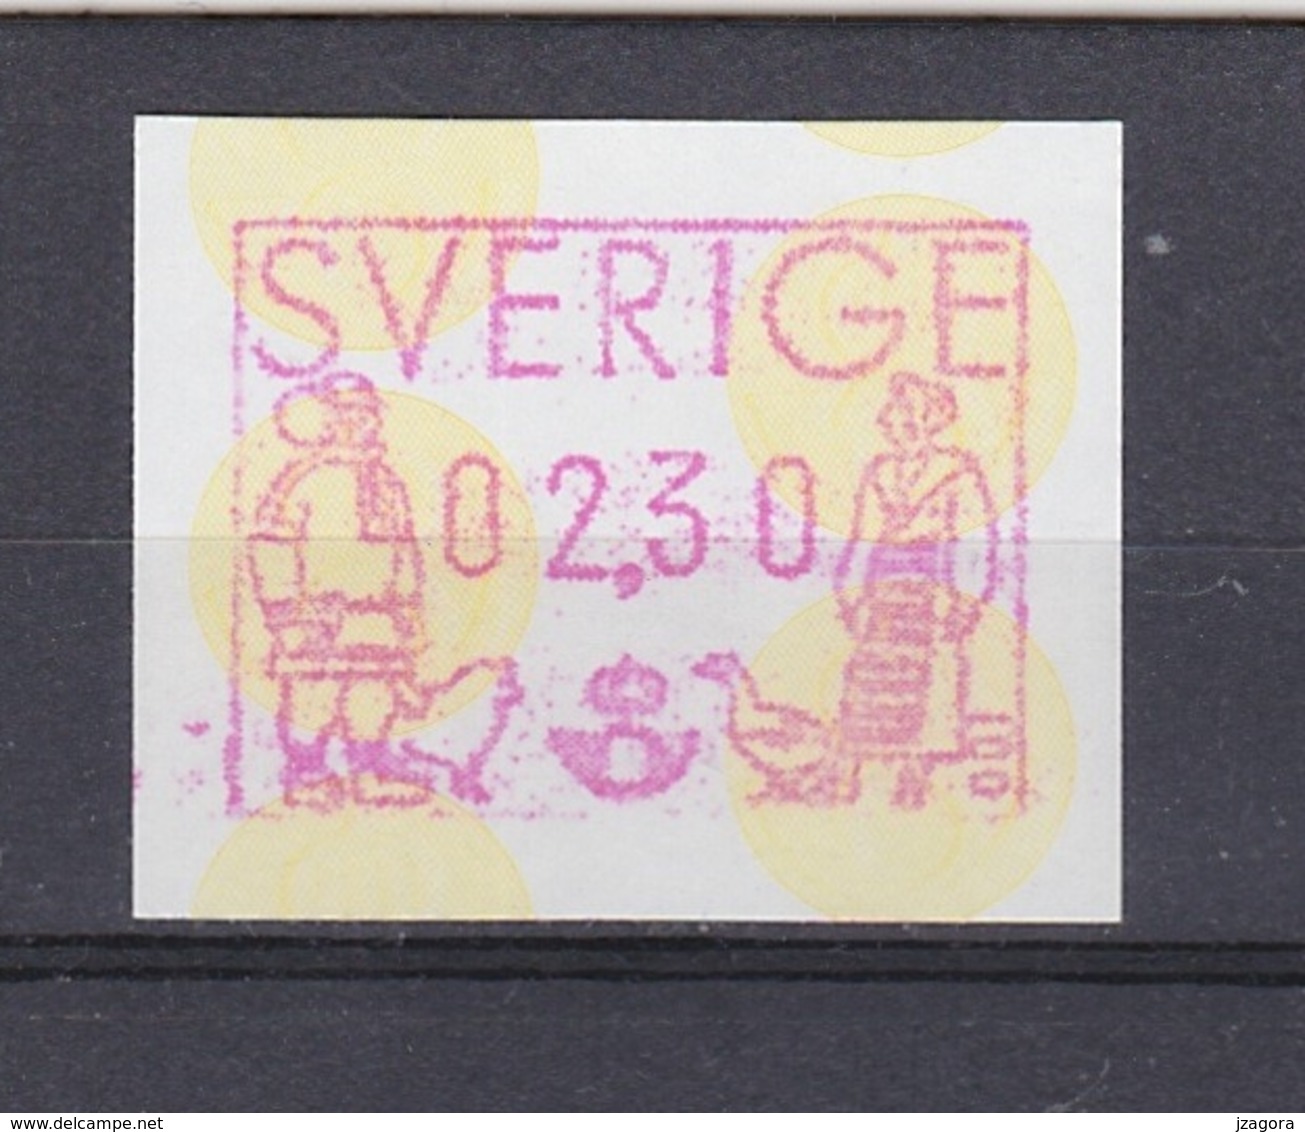 SWEDEN SUEDE SCHWEDEN 1991 PRAGMA FRAMA AUTOMATIC STAMPS AUTOMATPORTO AUTOMATENMARKEN AUTOMAT MÄRKE 2,30 Kr MNH ATM - Machine Labels [ATM]